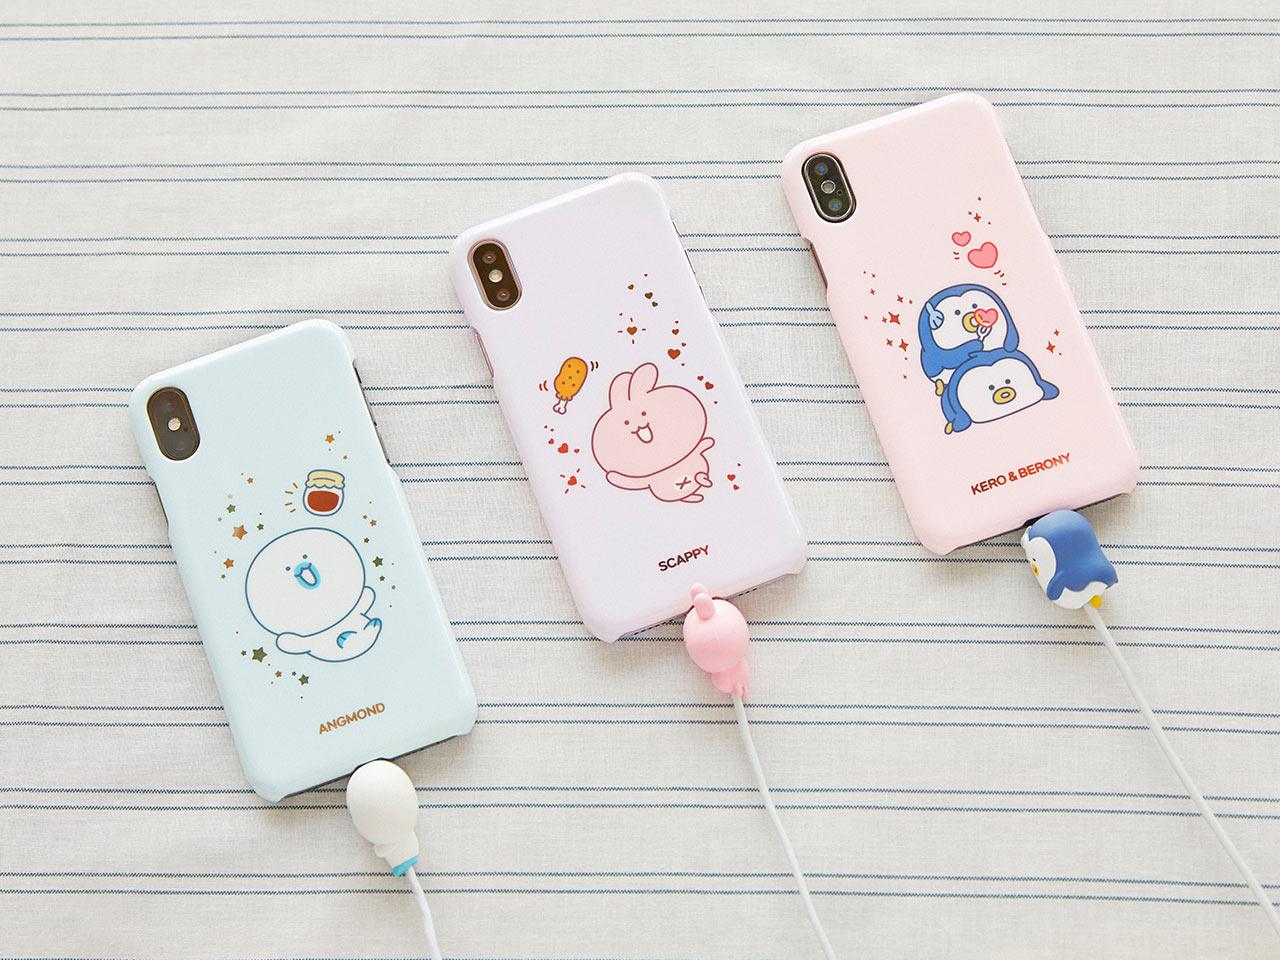 Kakao Friends Kero&Berony Phone Case 手機殼 - SOUL SIMPLE HK